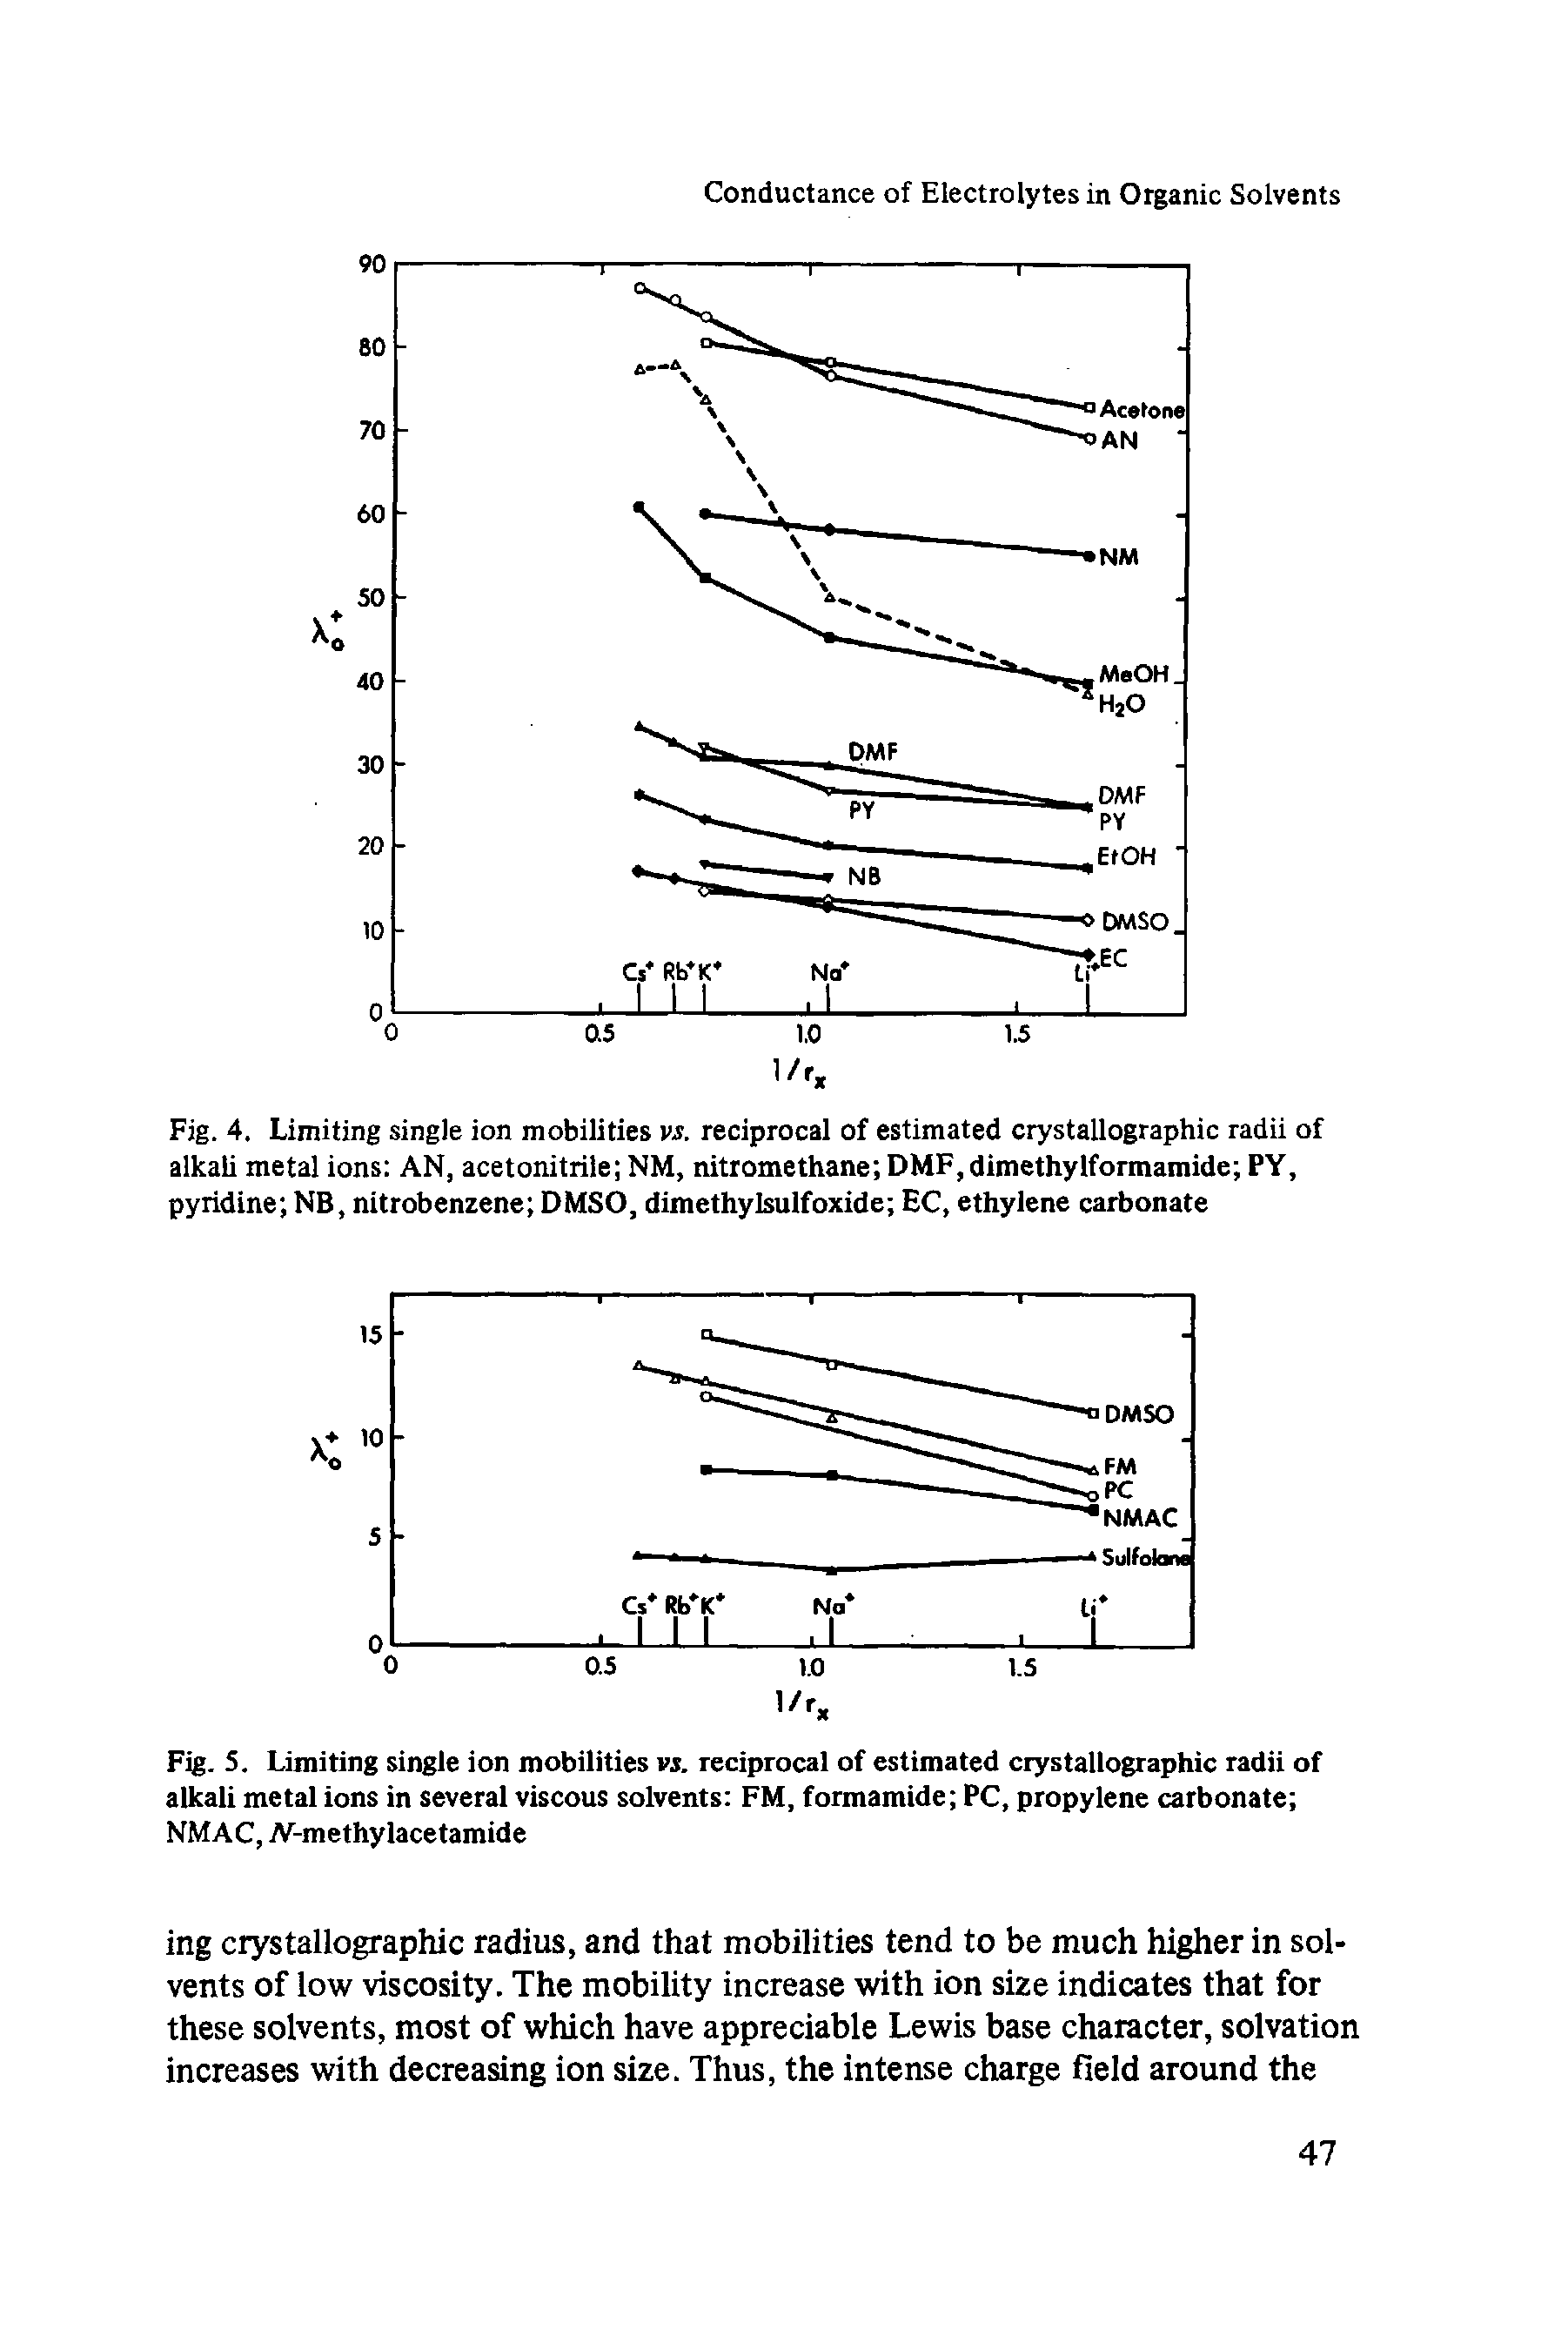 Fig. 5. Limiting single ion mobilities vs. reciprocal of estimated crystallographic radii of alkali metal ions in several viscous solvents FM, formamide PC, propylene carbonate NMAC, Af-methylacetamide...